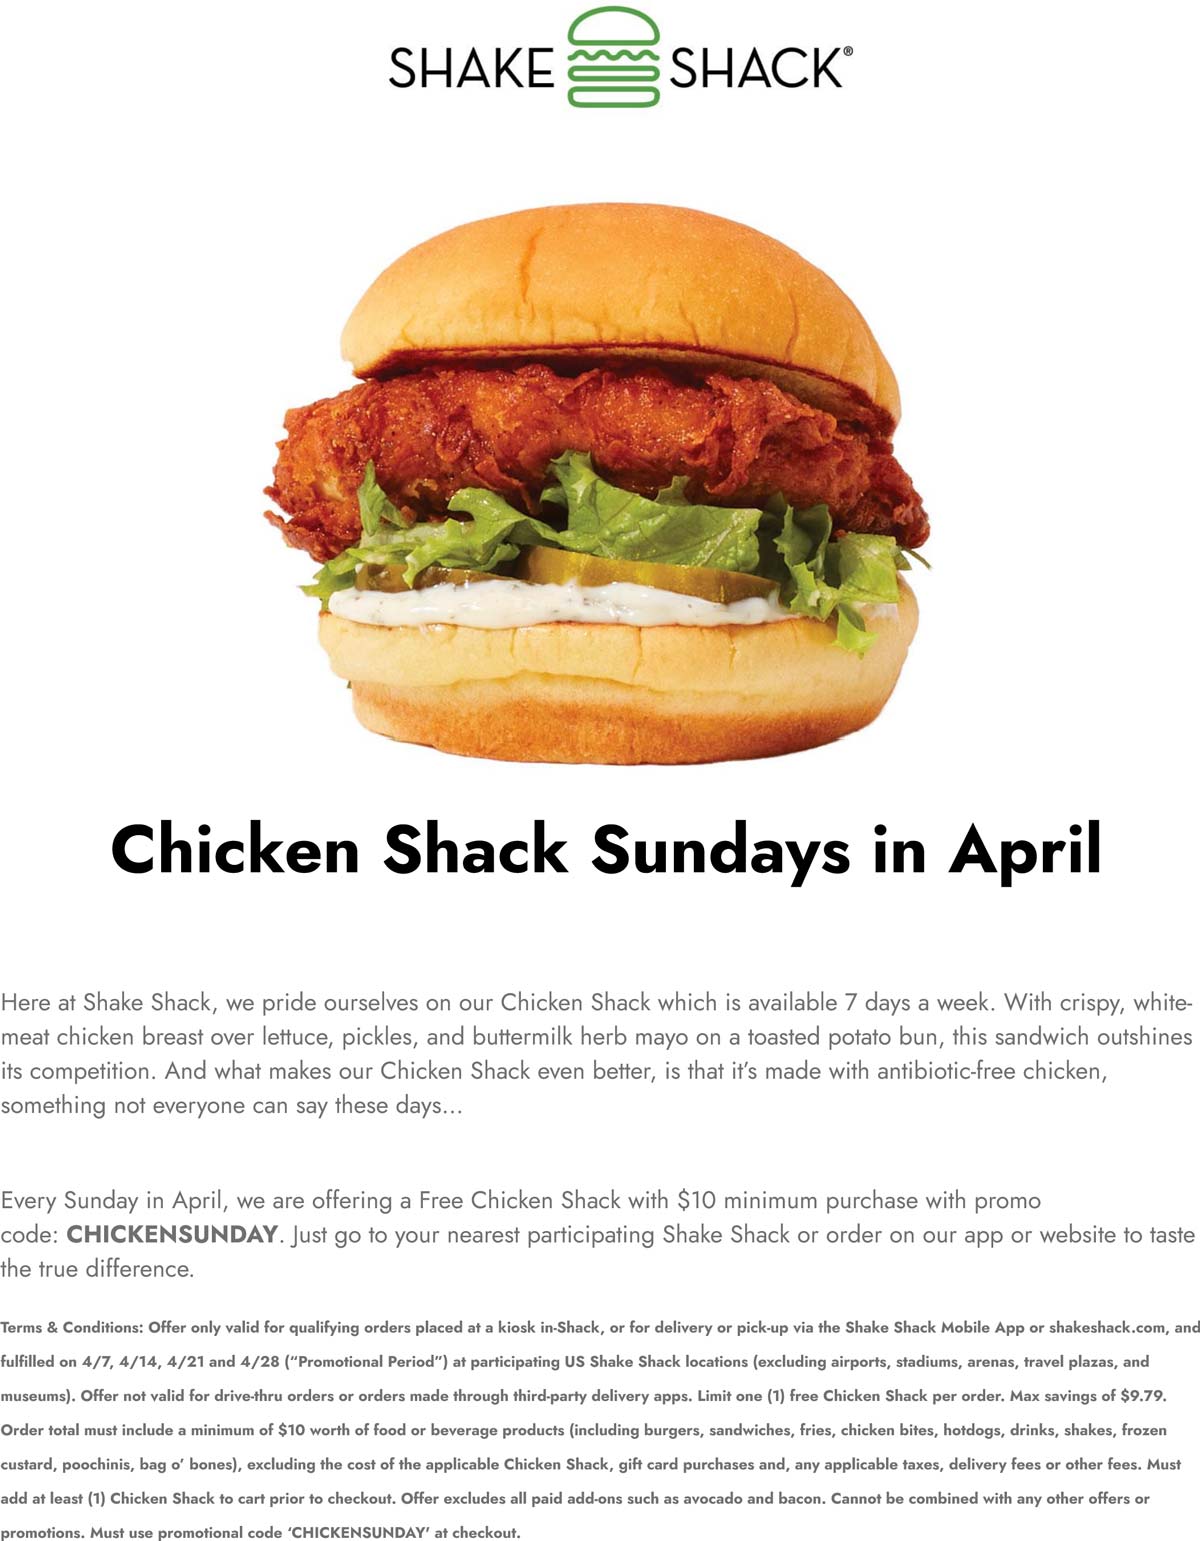 Shake Shack restaurants Coupon  Free chicken shack on $10 Sundays at Shake Shack via promo code CHICKENSUNDAY #shakeshack 